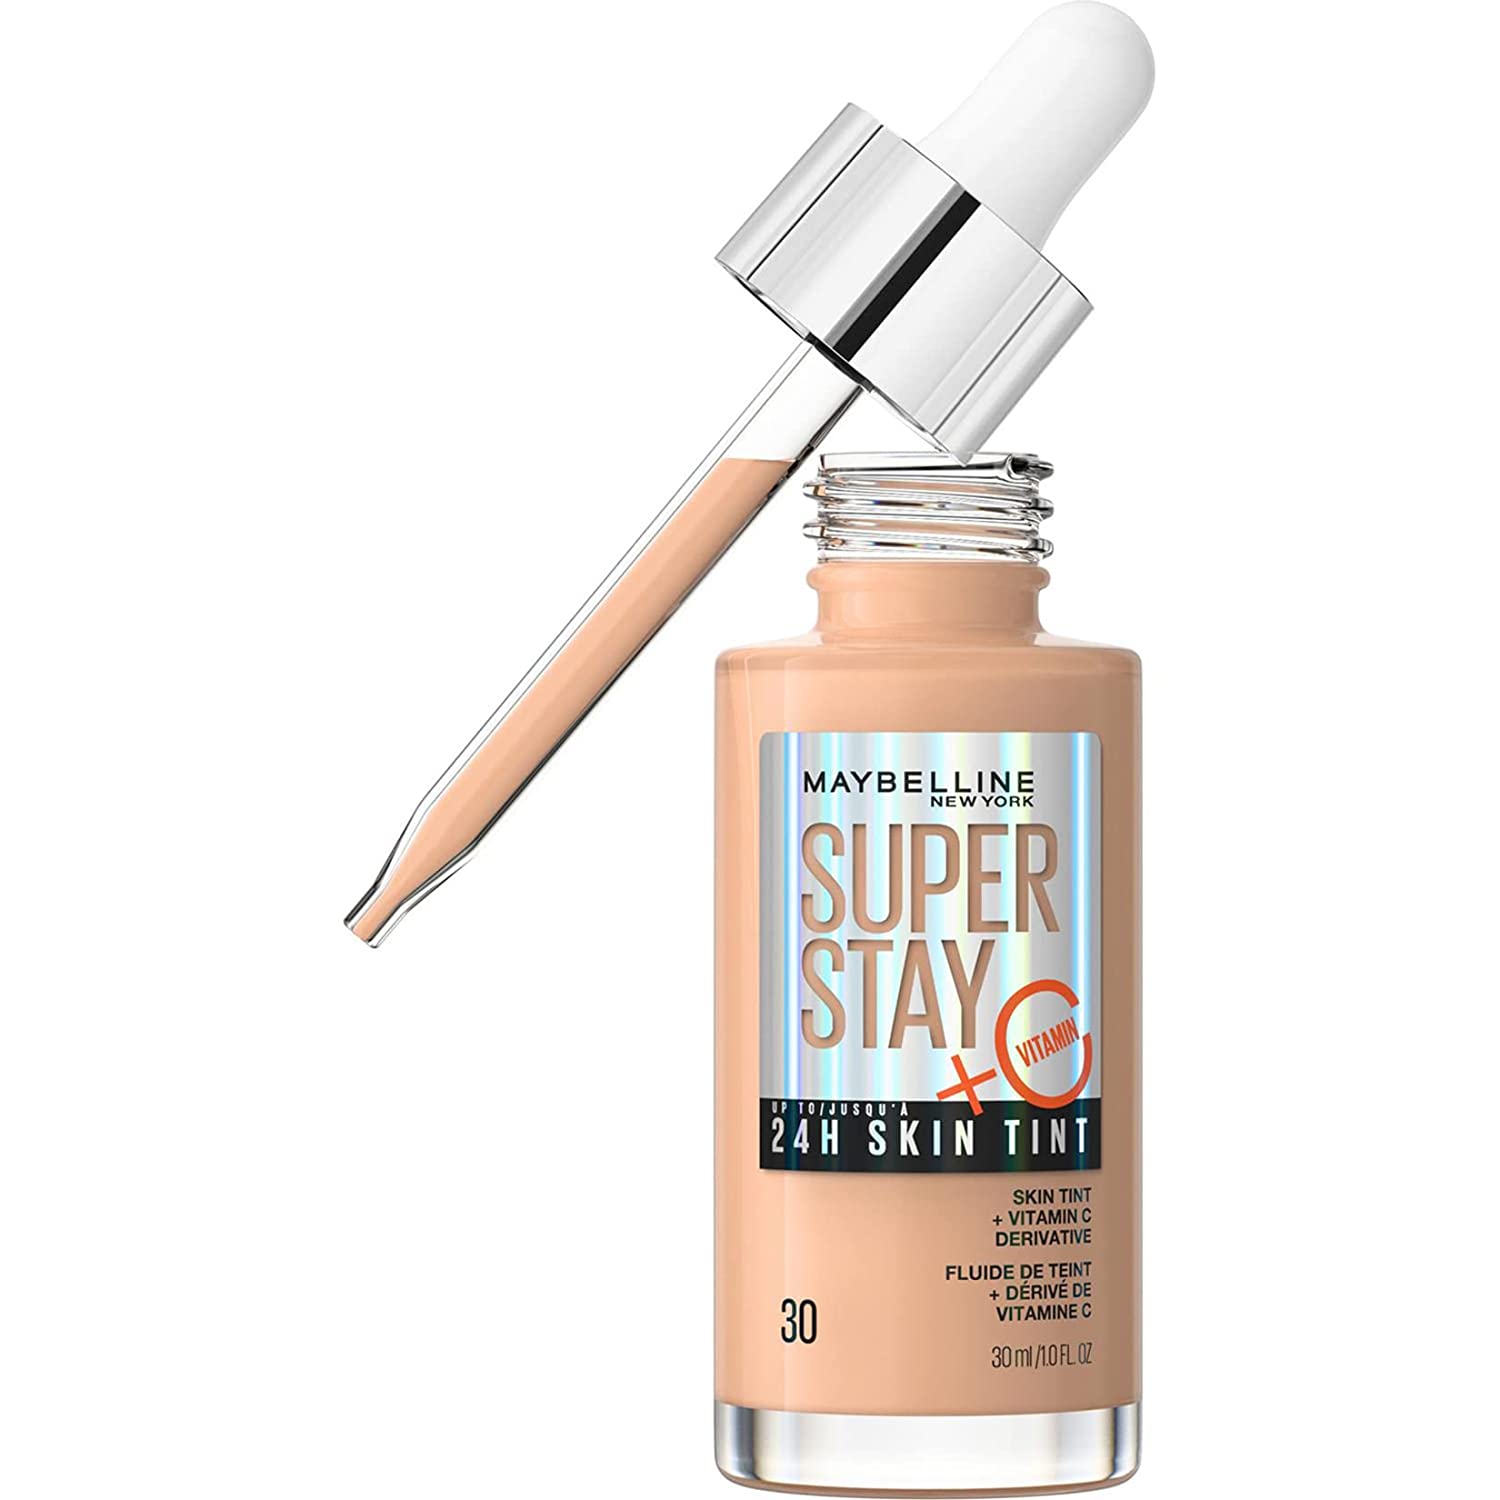 Maybelline New York Super Stay 24H Skin Tint Sand 30 30ml